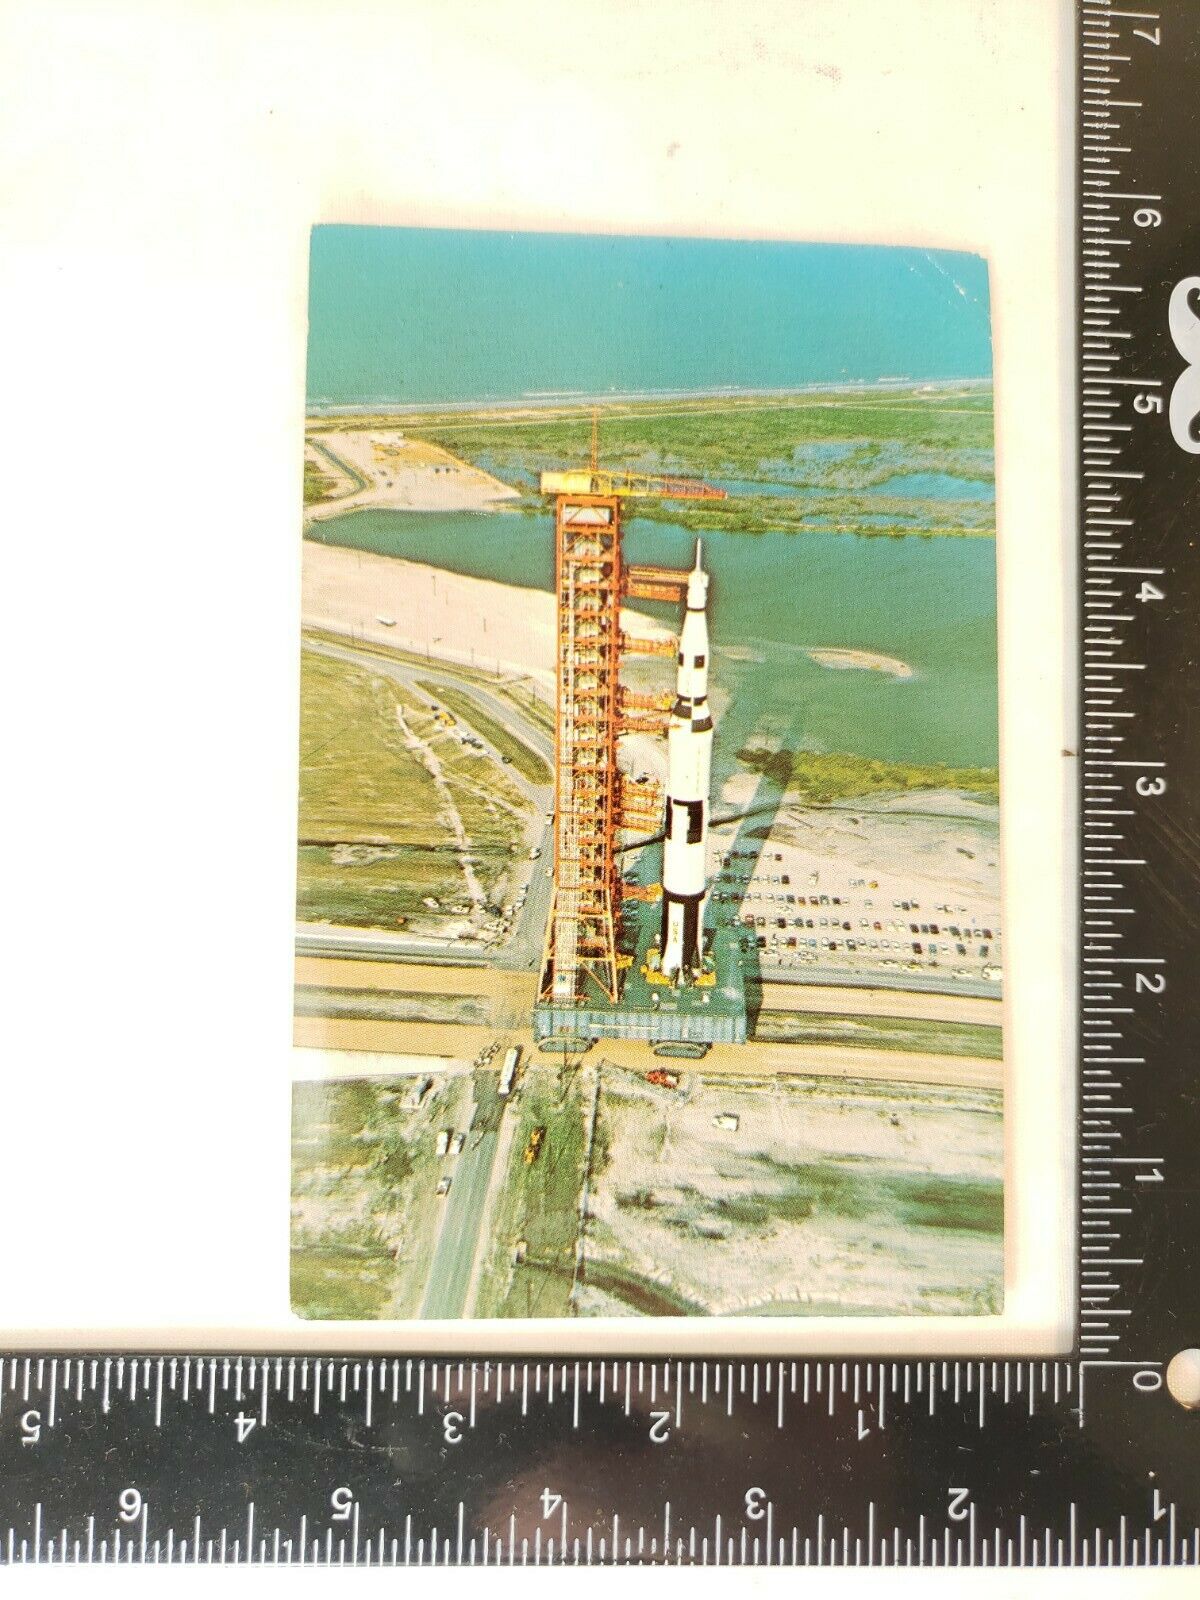 Apollo Saturn V John F. Kennedy Space Center NASA Vintage Postcard-FREE SHIPPING